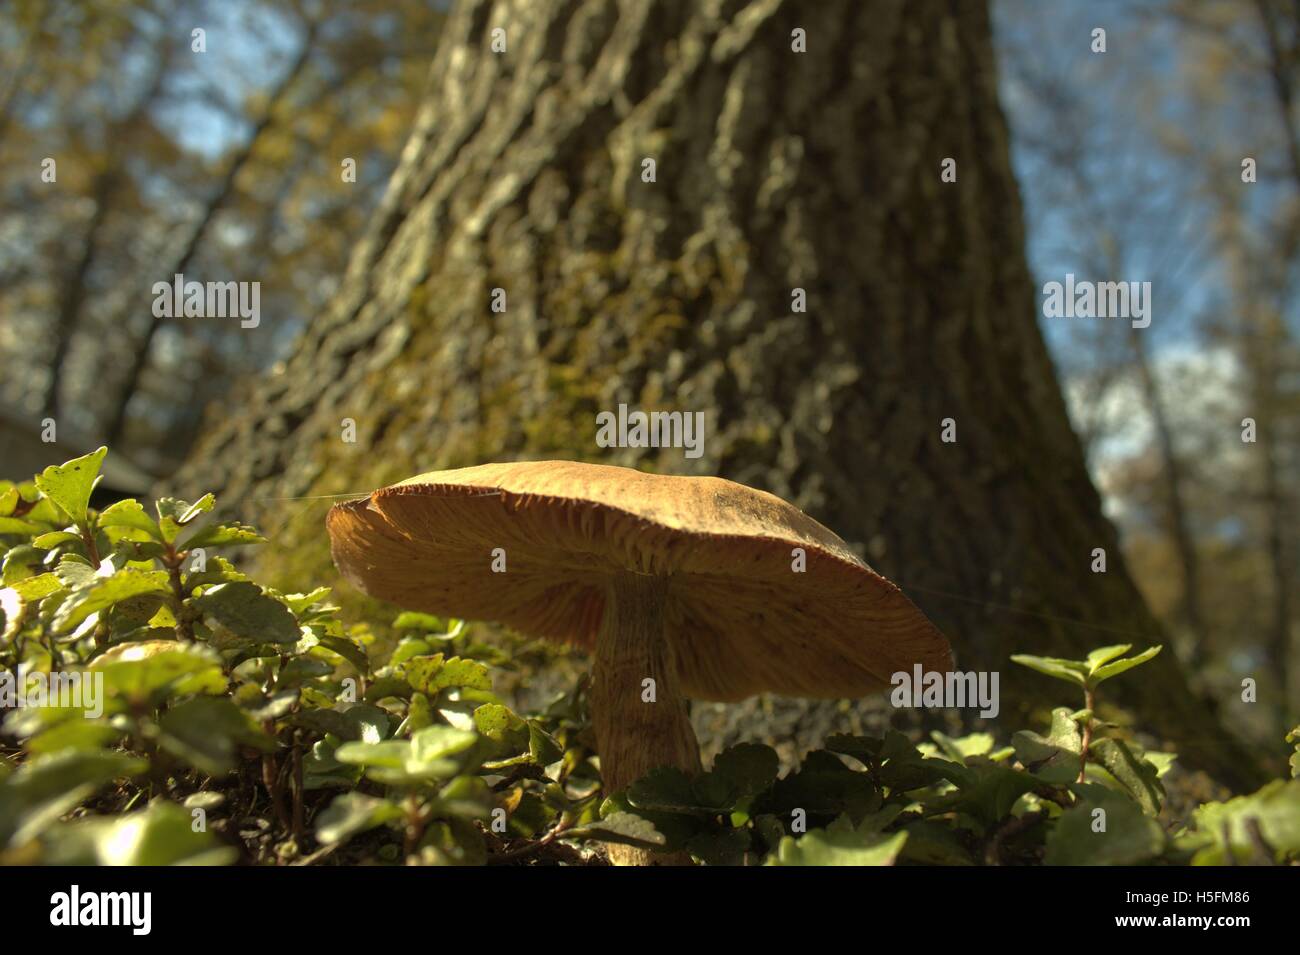 Large Old Russula Mushroom Below an Oak Tree Stock Photo